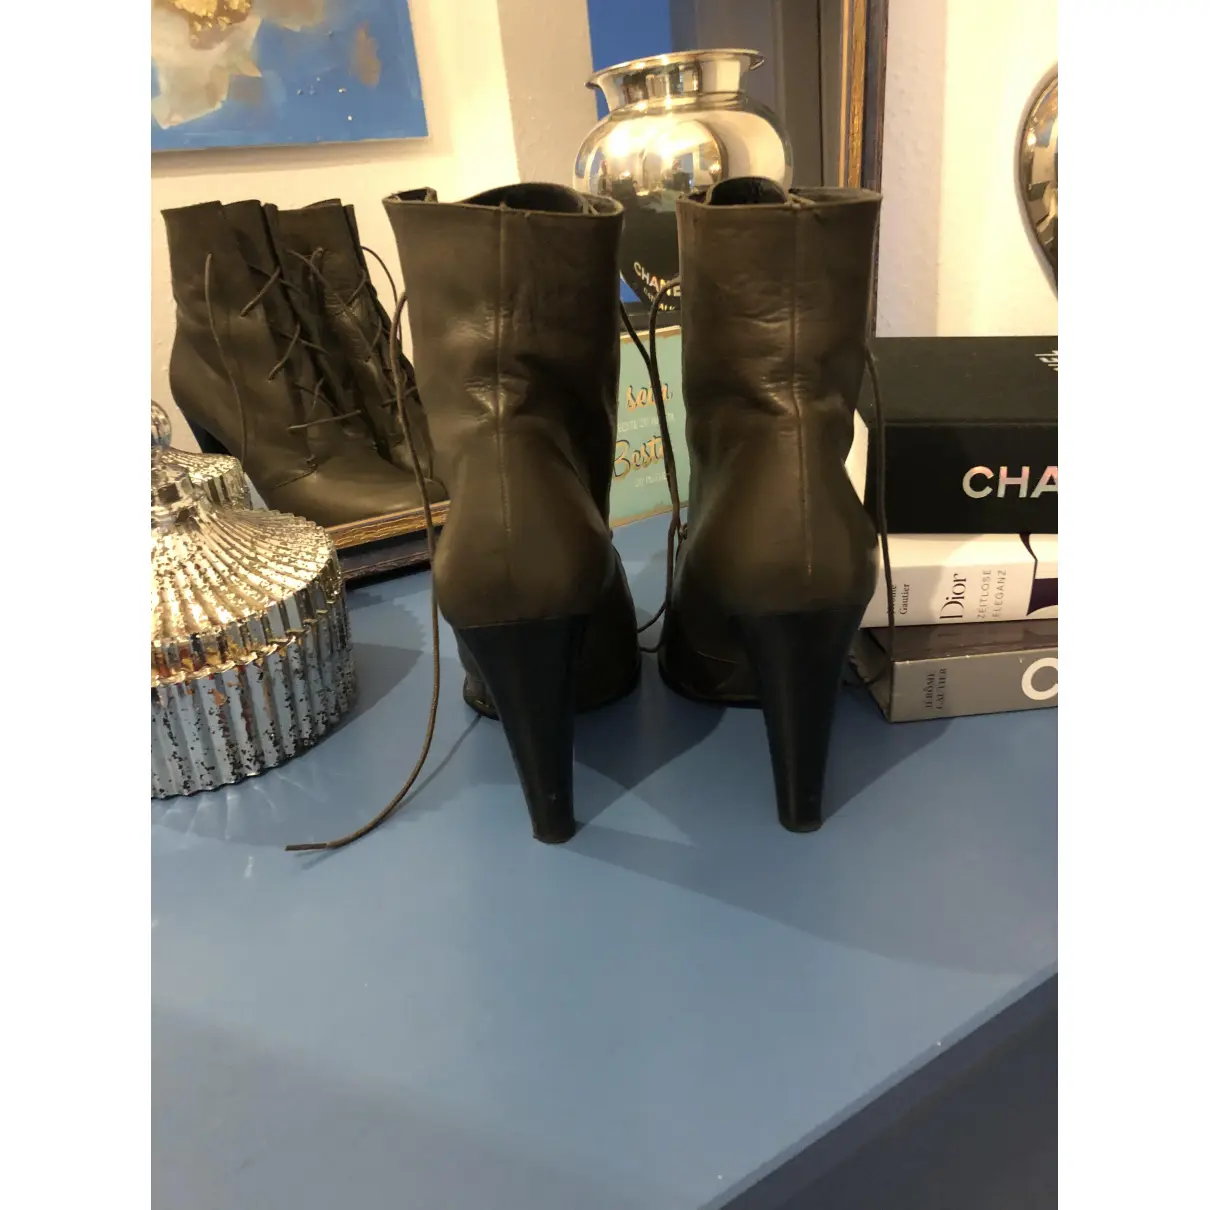 Luxury Vanessa Bruno Ankle boots Women